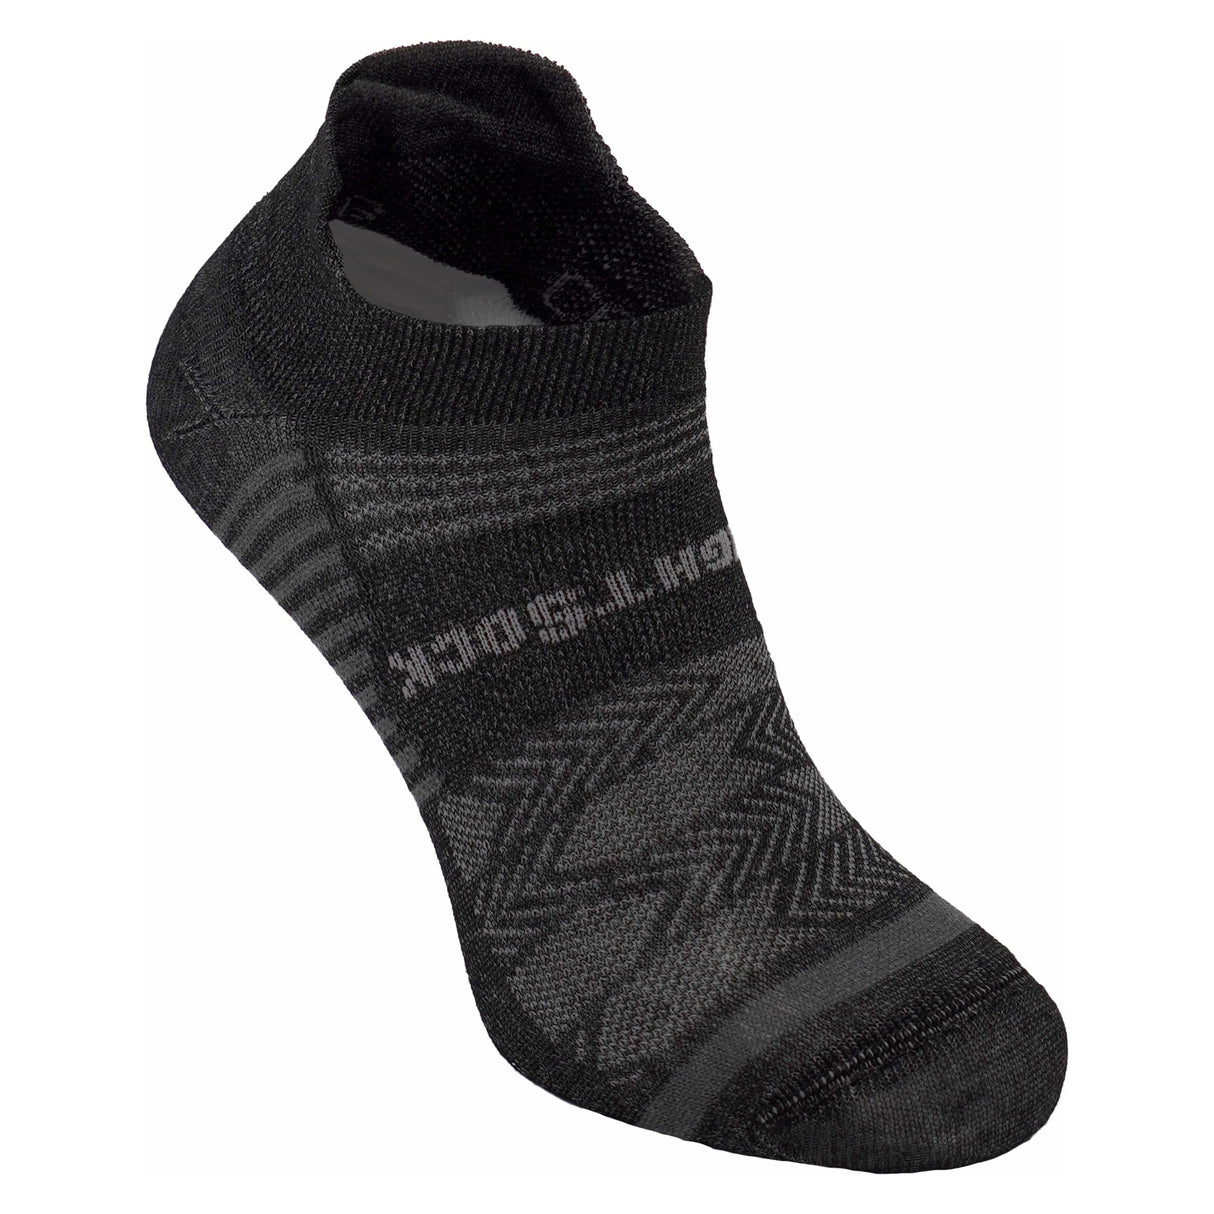 Wrightsock Coolmesh II Tab Socks  -  Small / Black Pearl / Single Pair